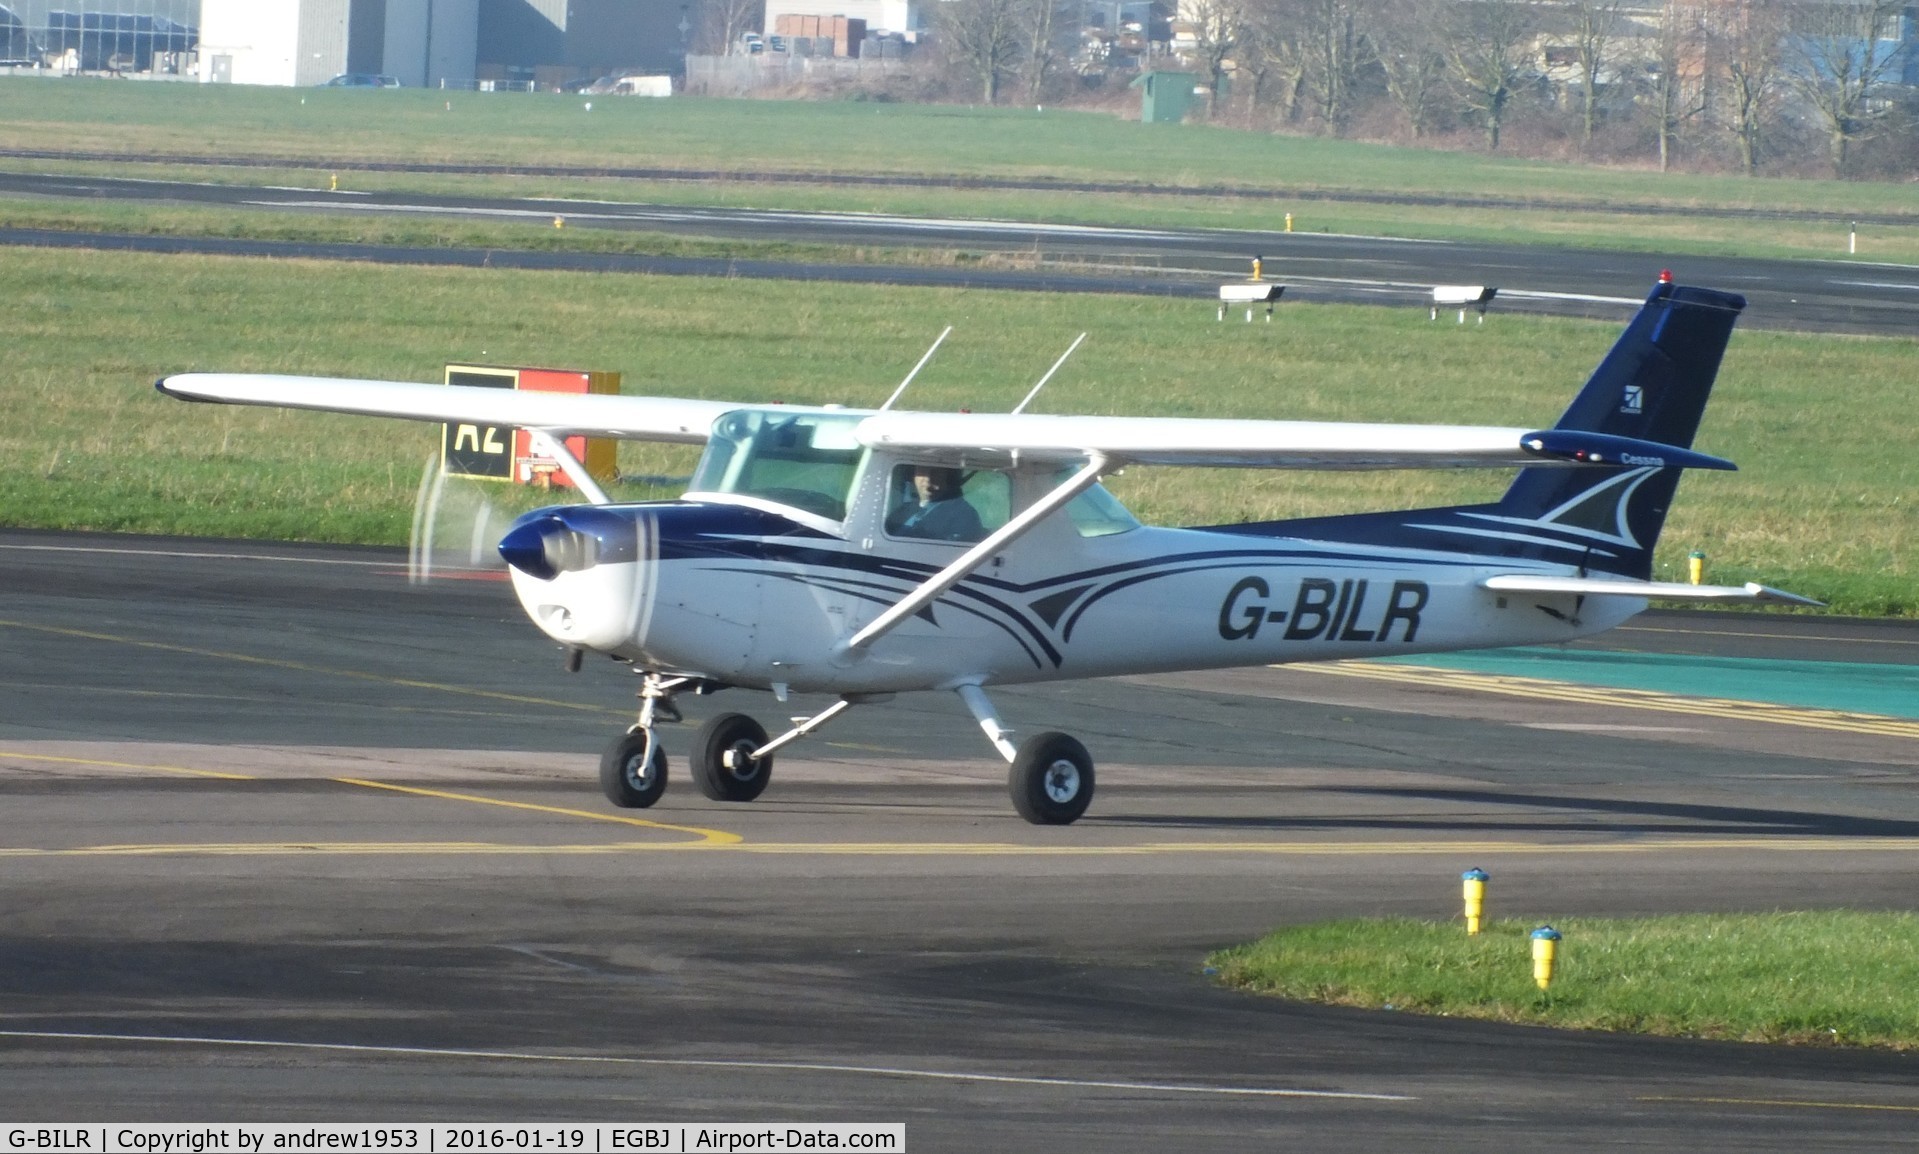 G-BILR, 1981 Cessna 152 C/N 152-84822, G-BILR at Gloucestershire Airport.